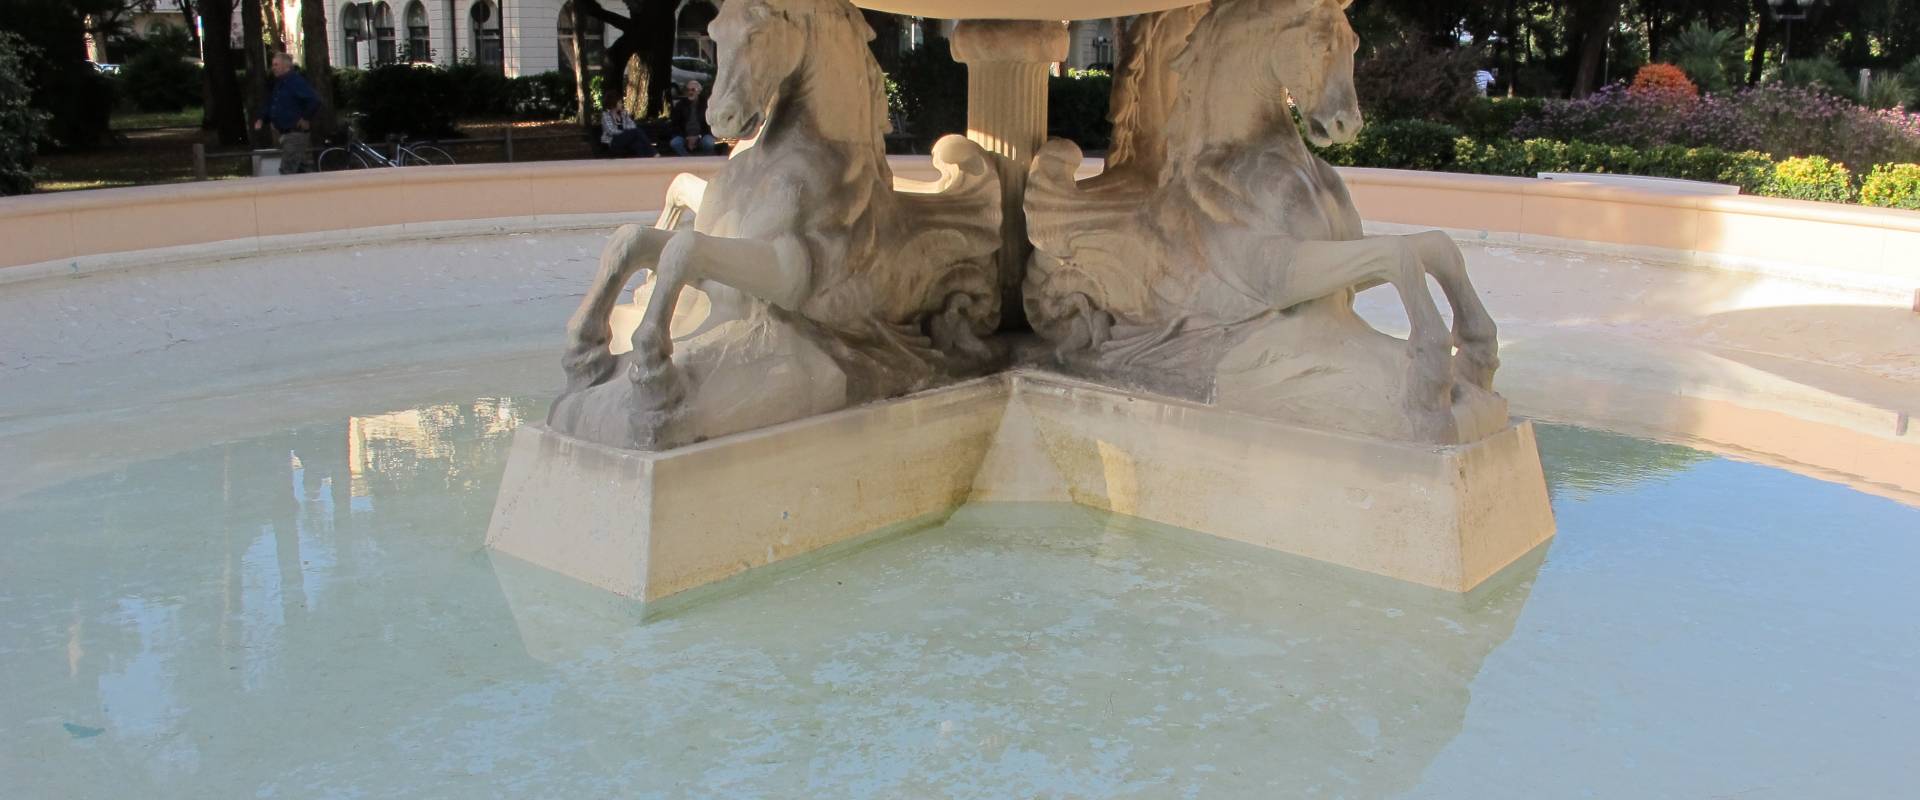 Rimini, fontana dei 4 cavalli 01 foto di Sailko